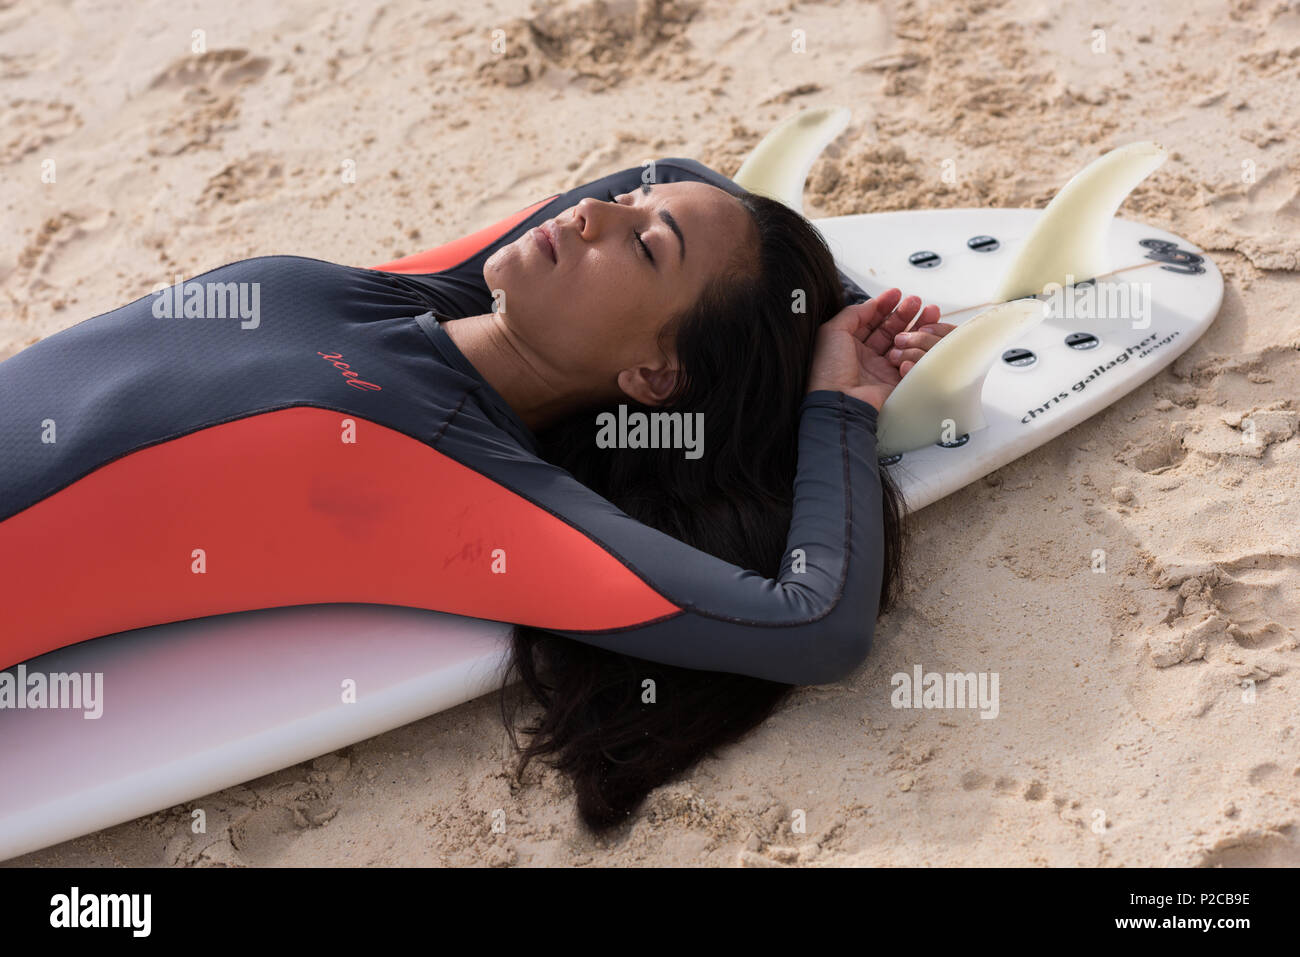 Woman Sleeping On Surfboard In The Beach Stock Photo Alamy